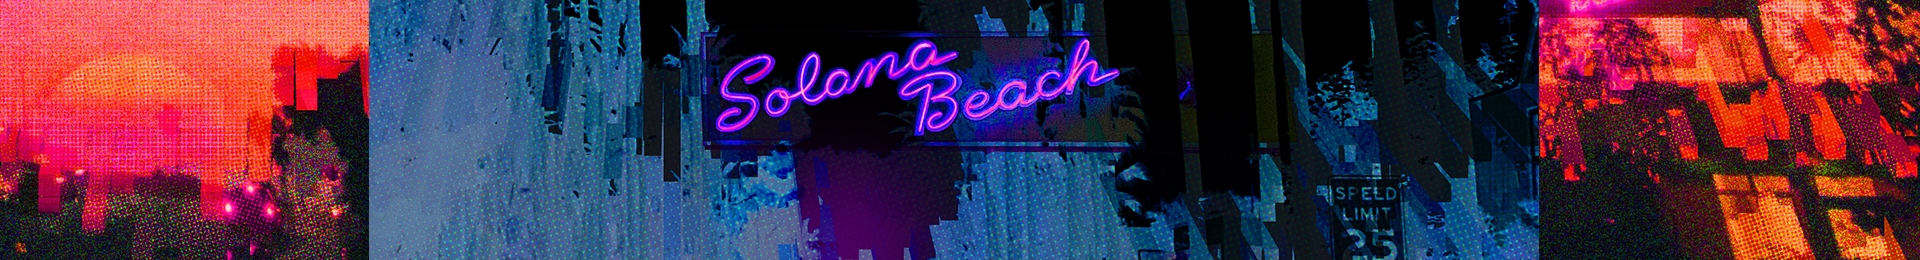 Lights of Solana Beach banner